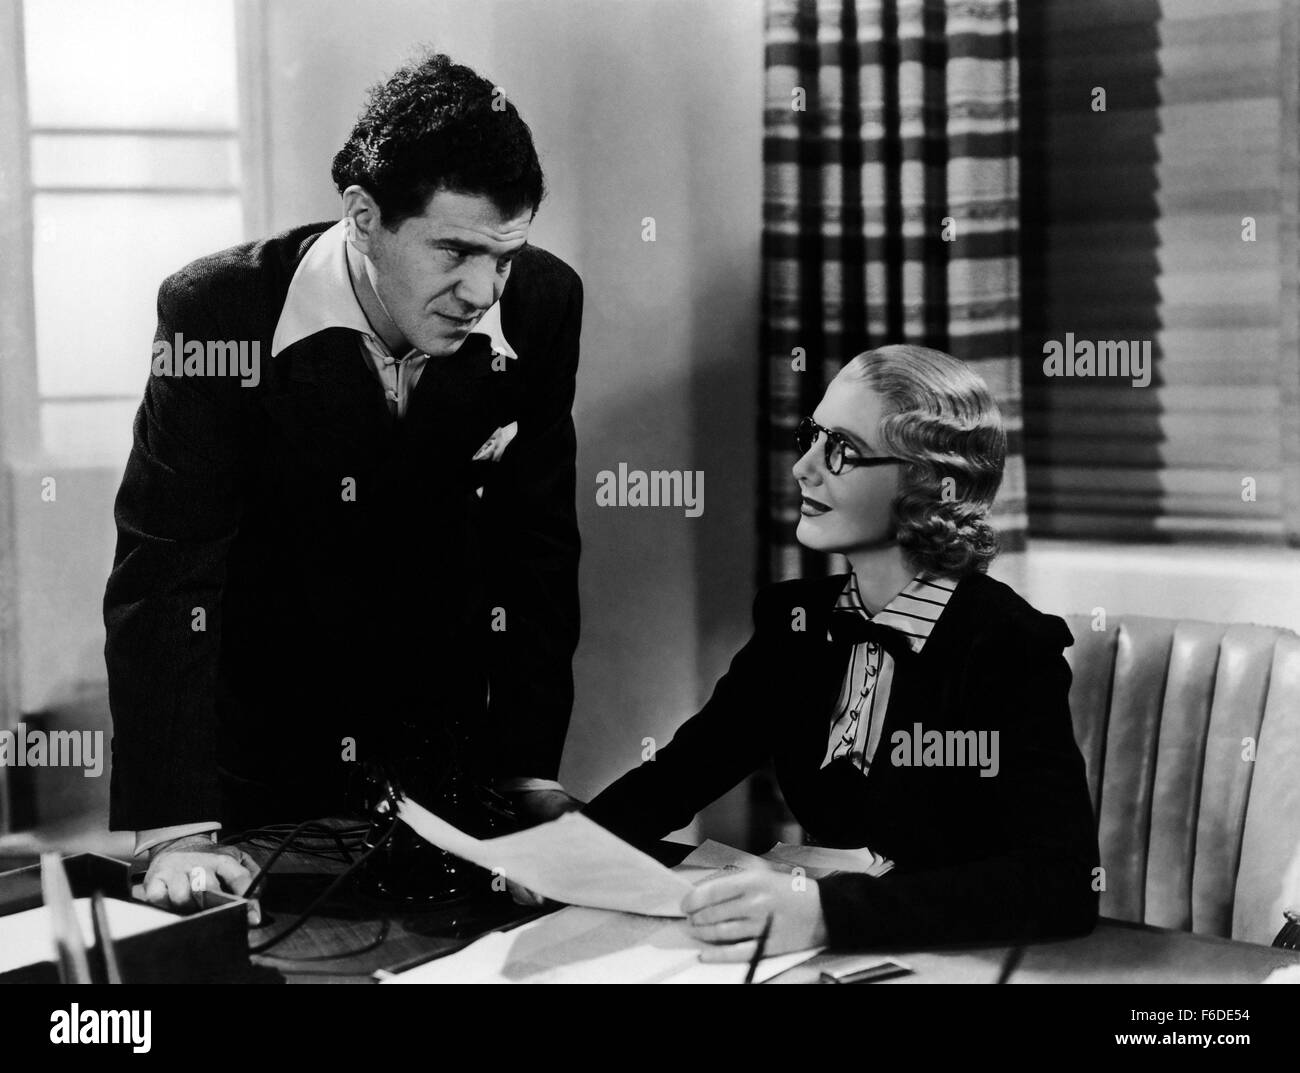 RELEASE DATE: Dec 24, 1936. MOVIE TITLE: More Than a Secretary. STUDIO: Columbia Pictures. PICTURED: JEAN ARTHUR as Carol Baldwin. Stock Photo